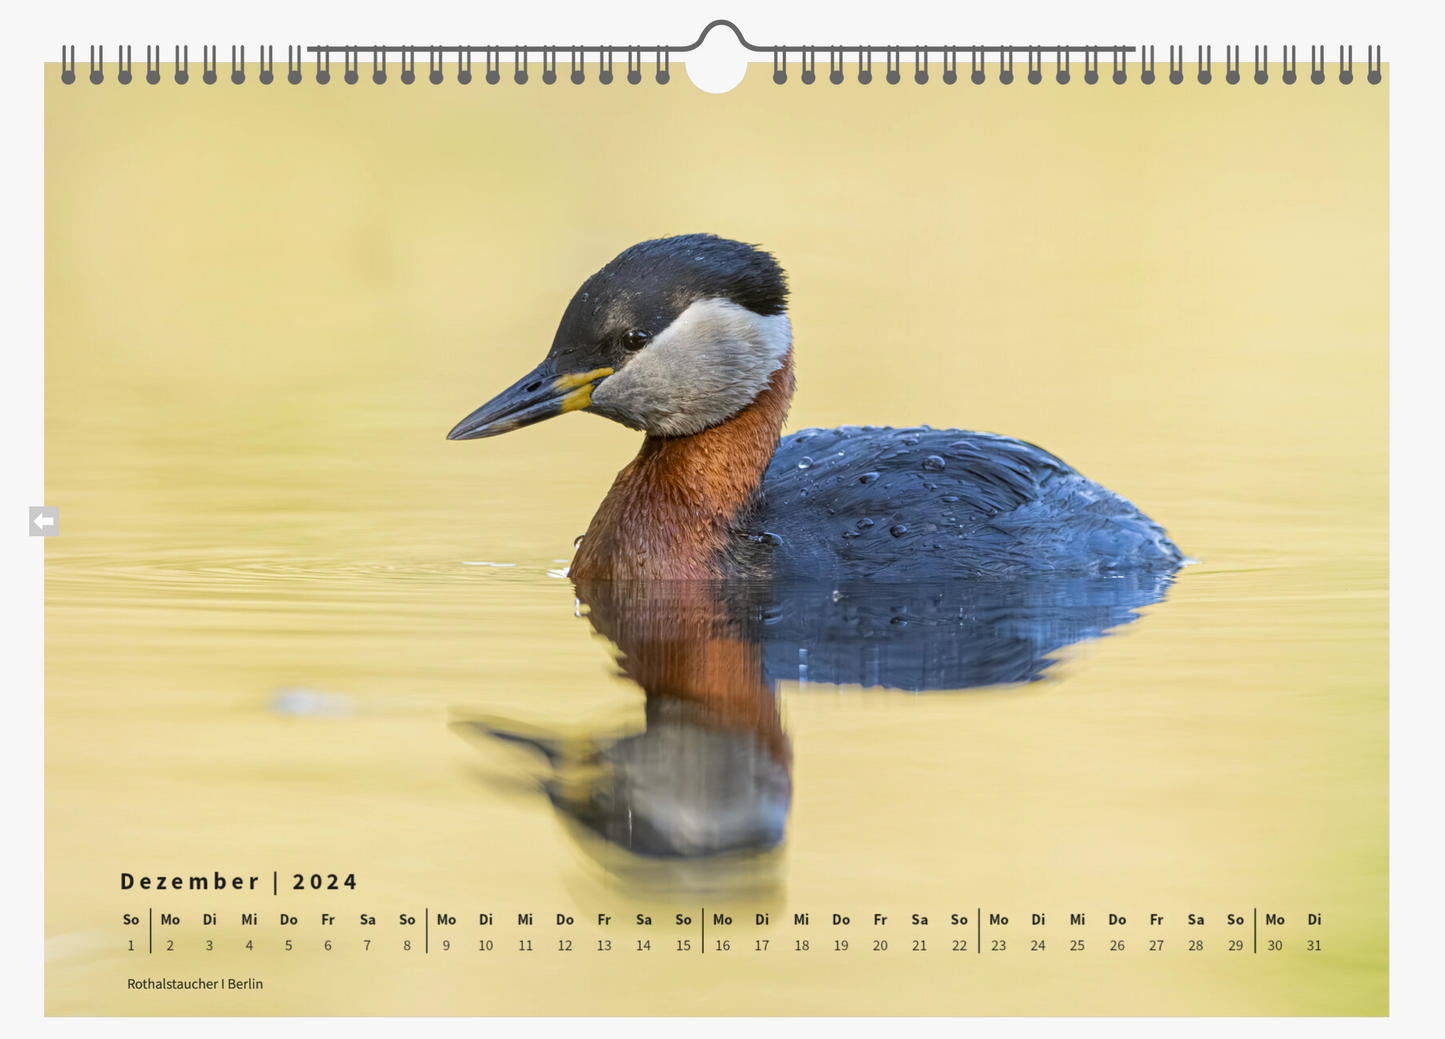 Fotokalender „Unsere Vögel 2024"